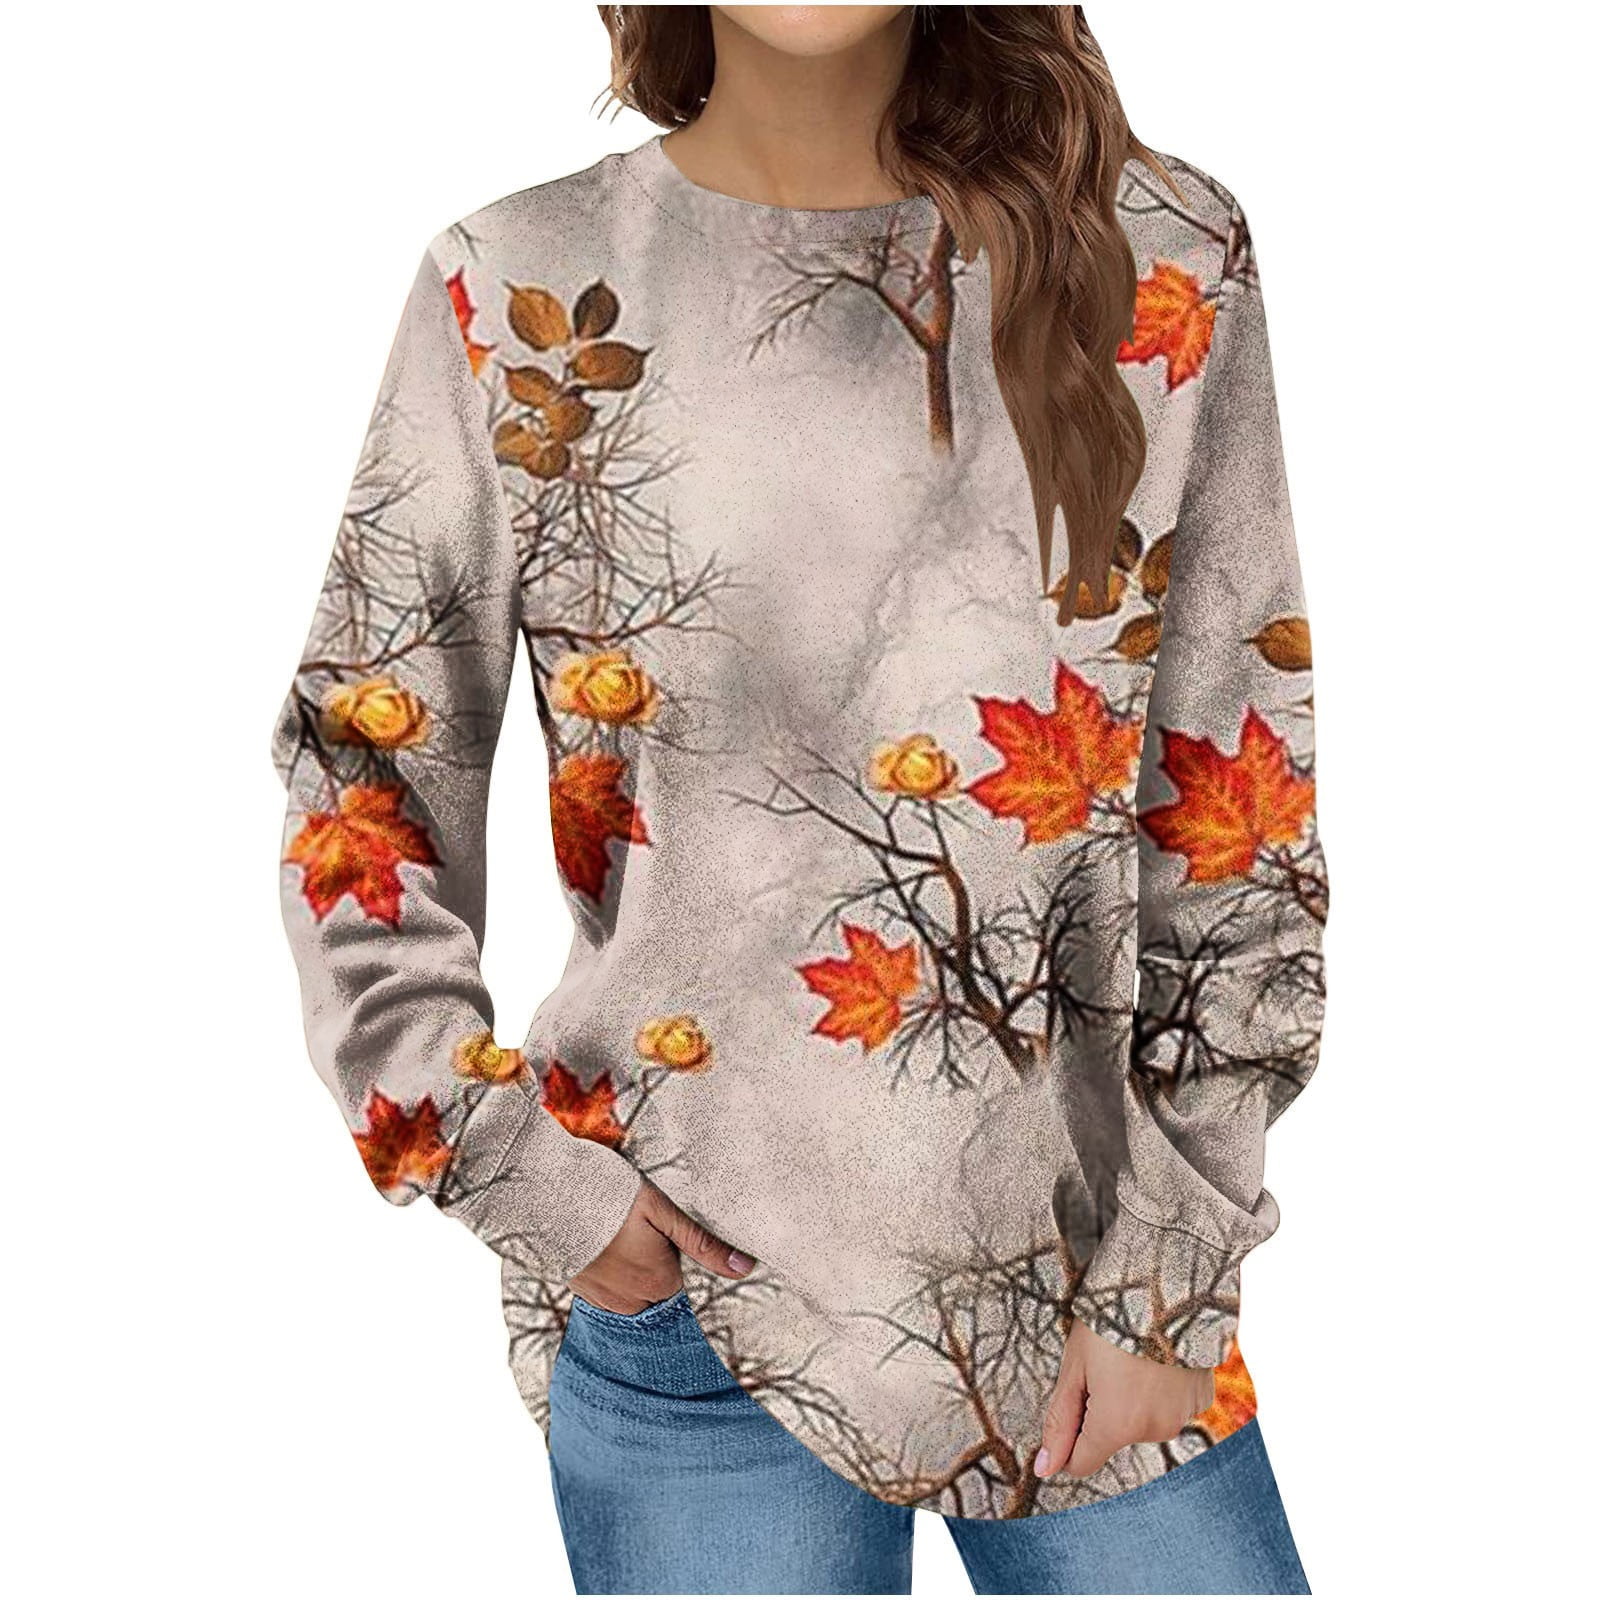 Women's Plain Sweatshirts Orange - 2023 collection